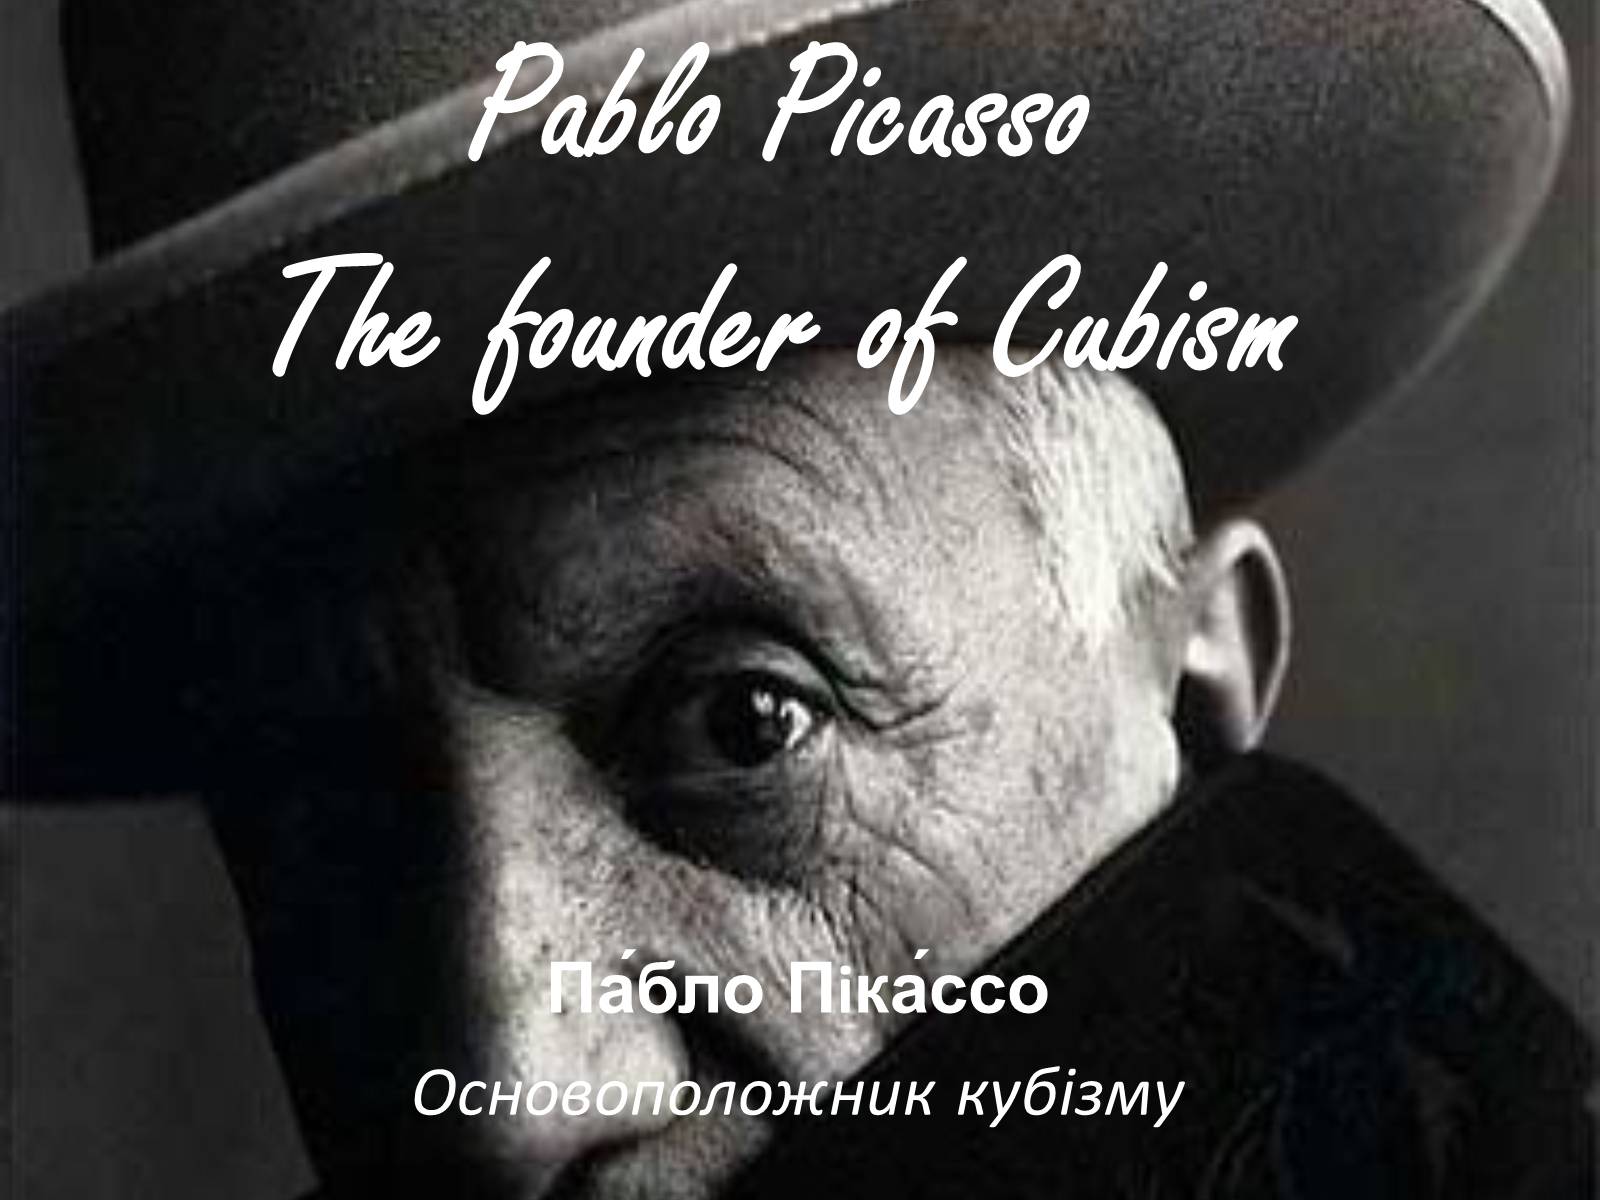 Презентація на тему «Pablo Picasso The founder of Cubism»